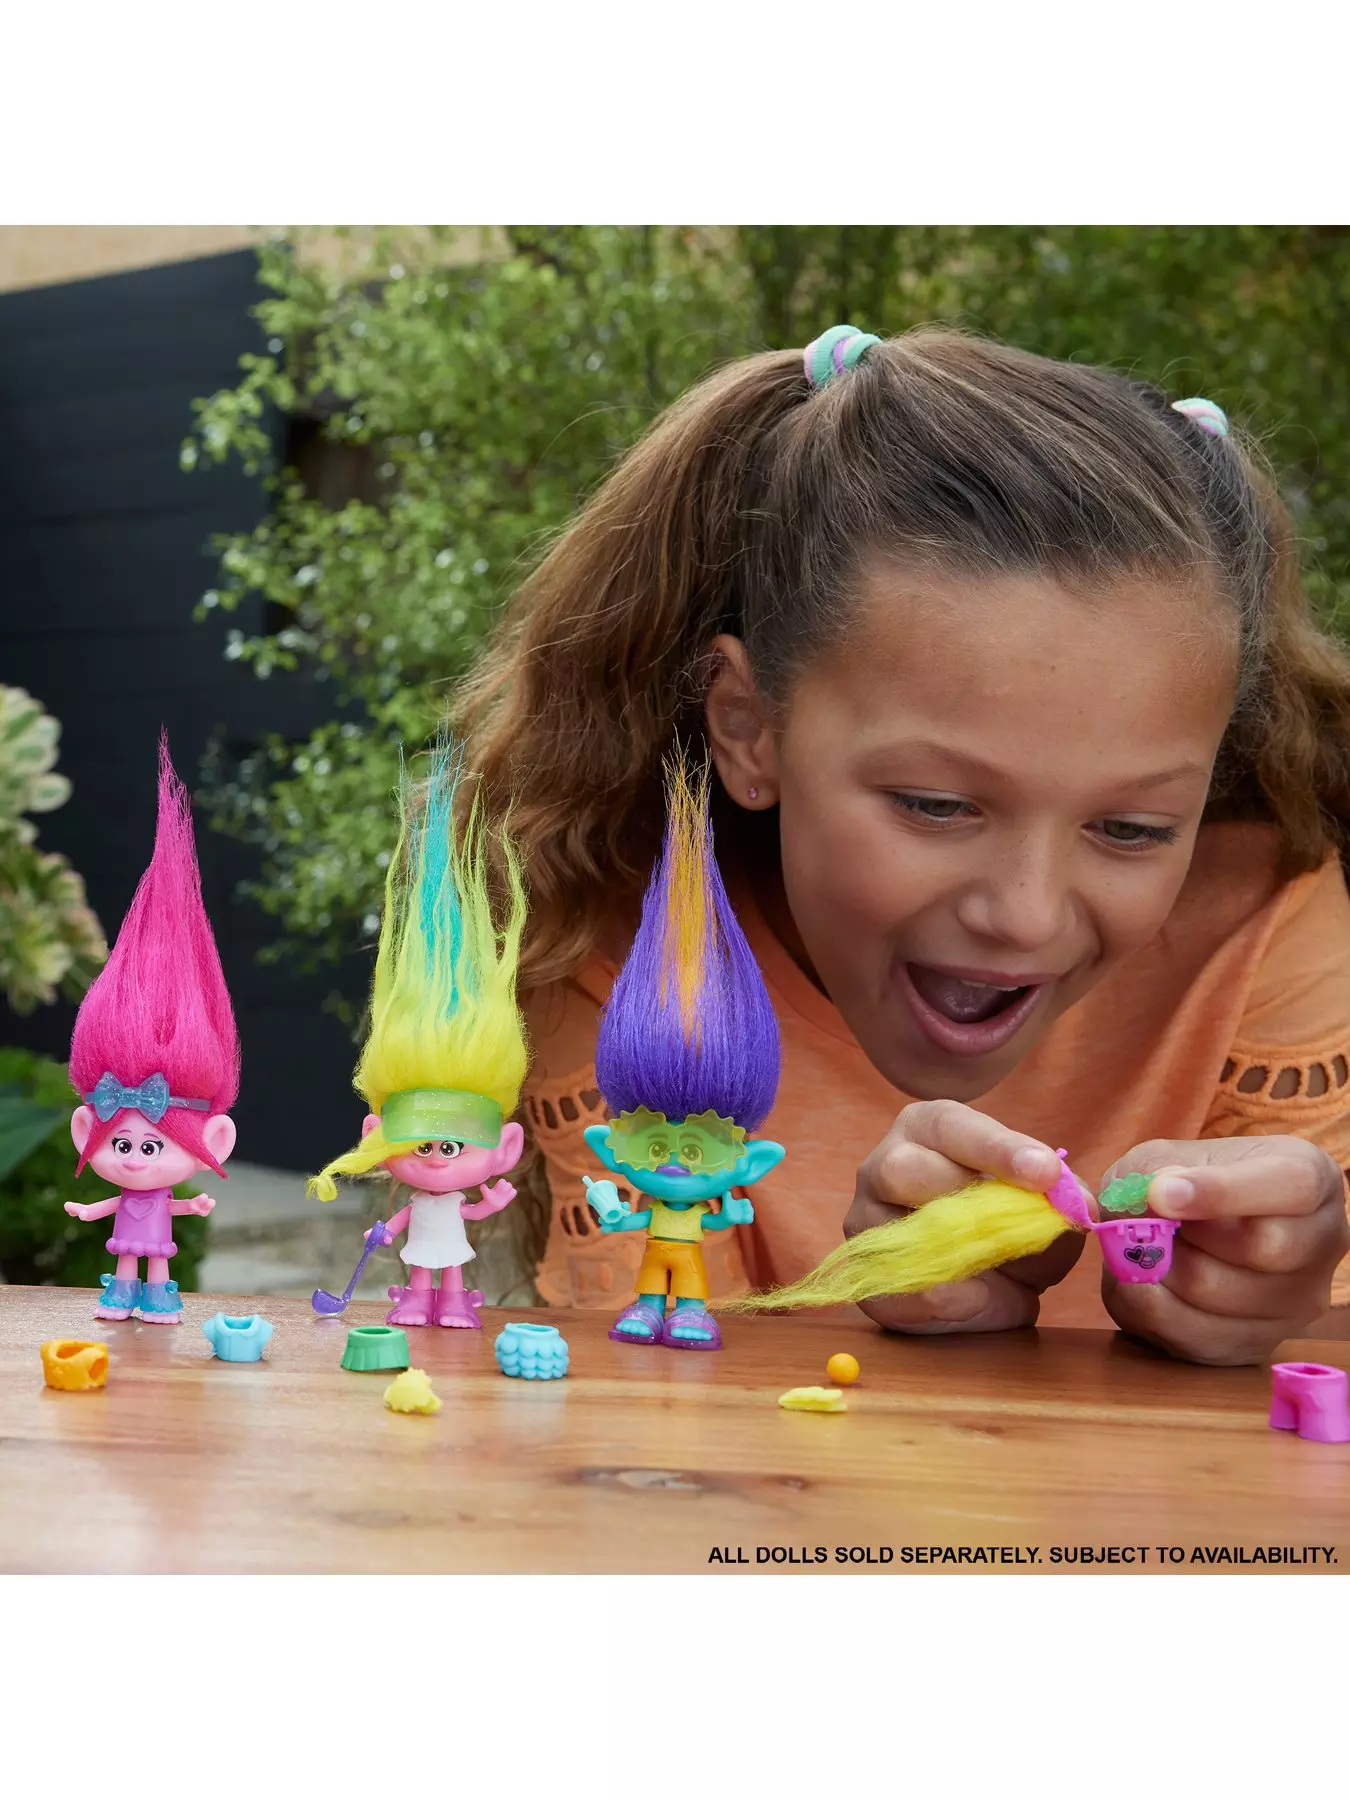 Opening the cutest Polly Pocket & DreamWorks Trolls playset with Poppy, Trolls 3